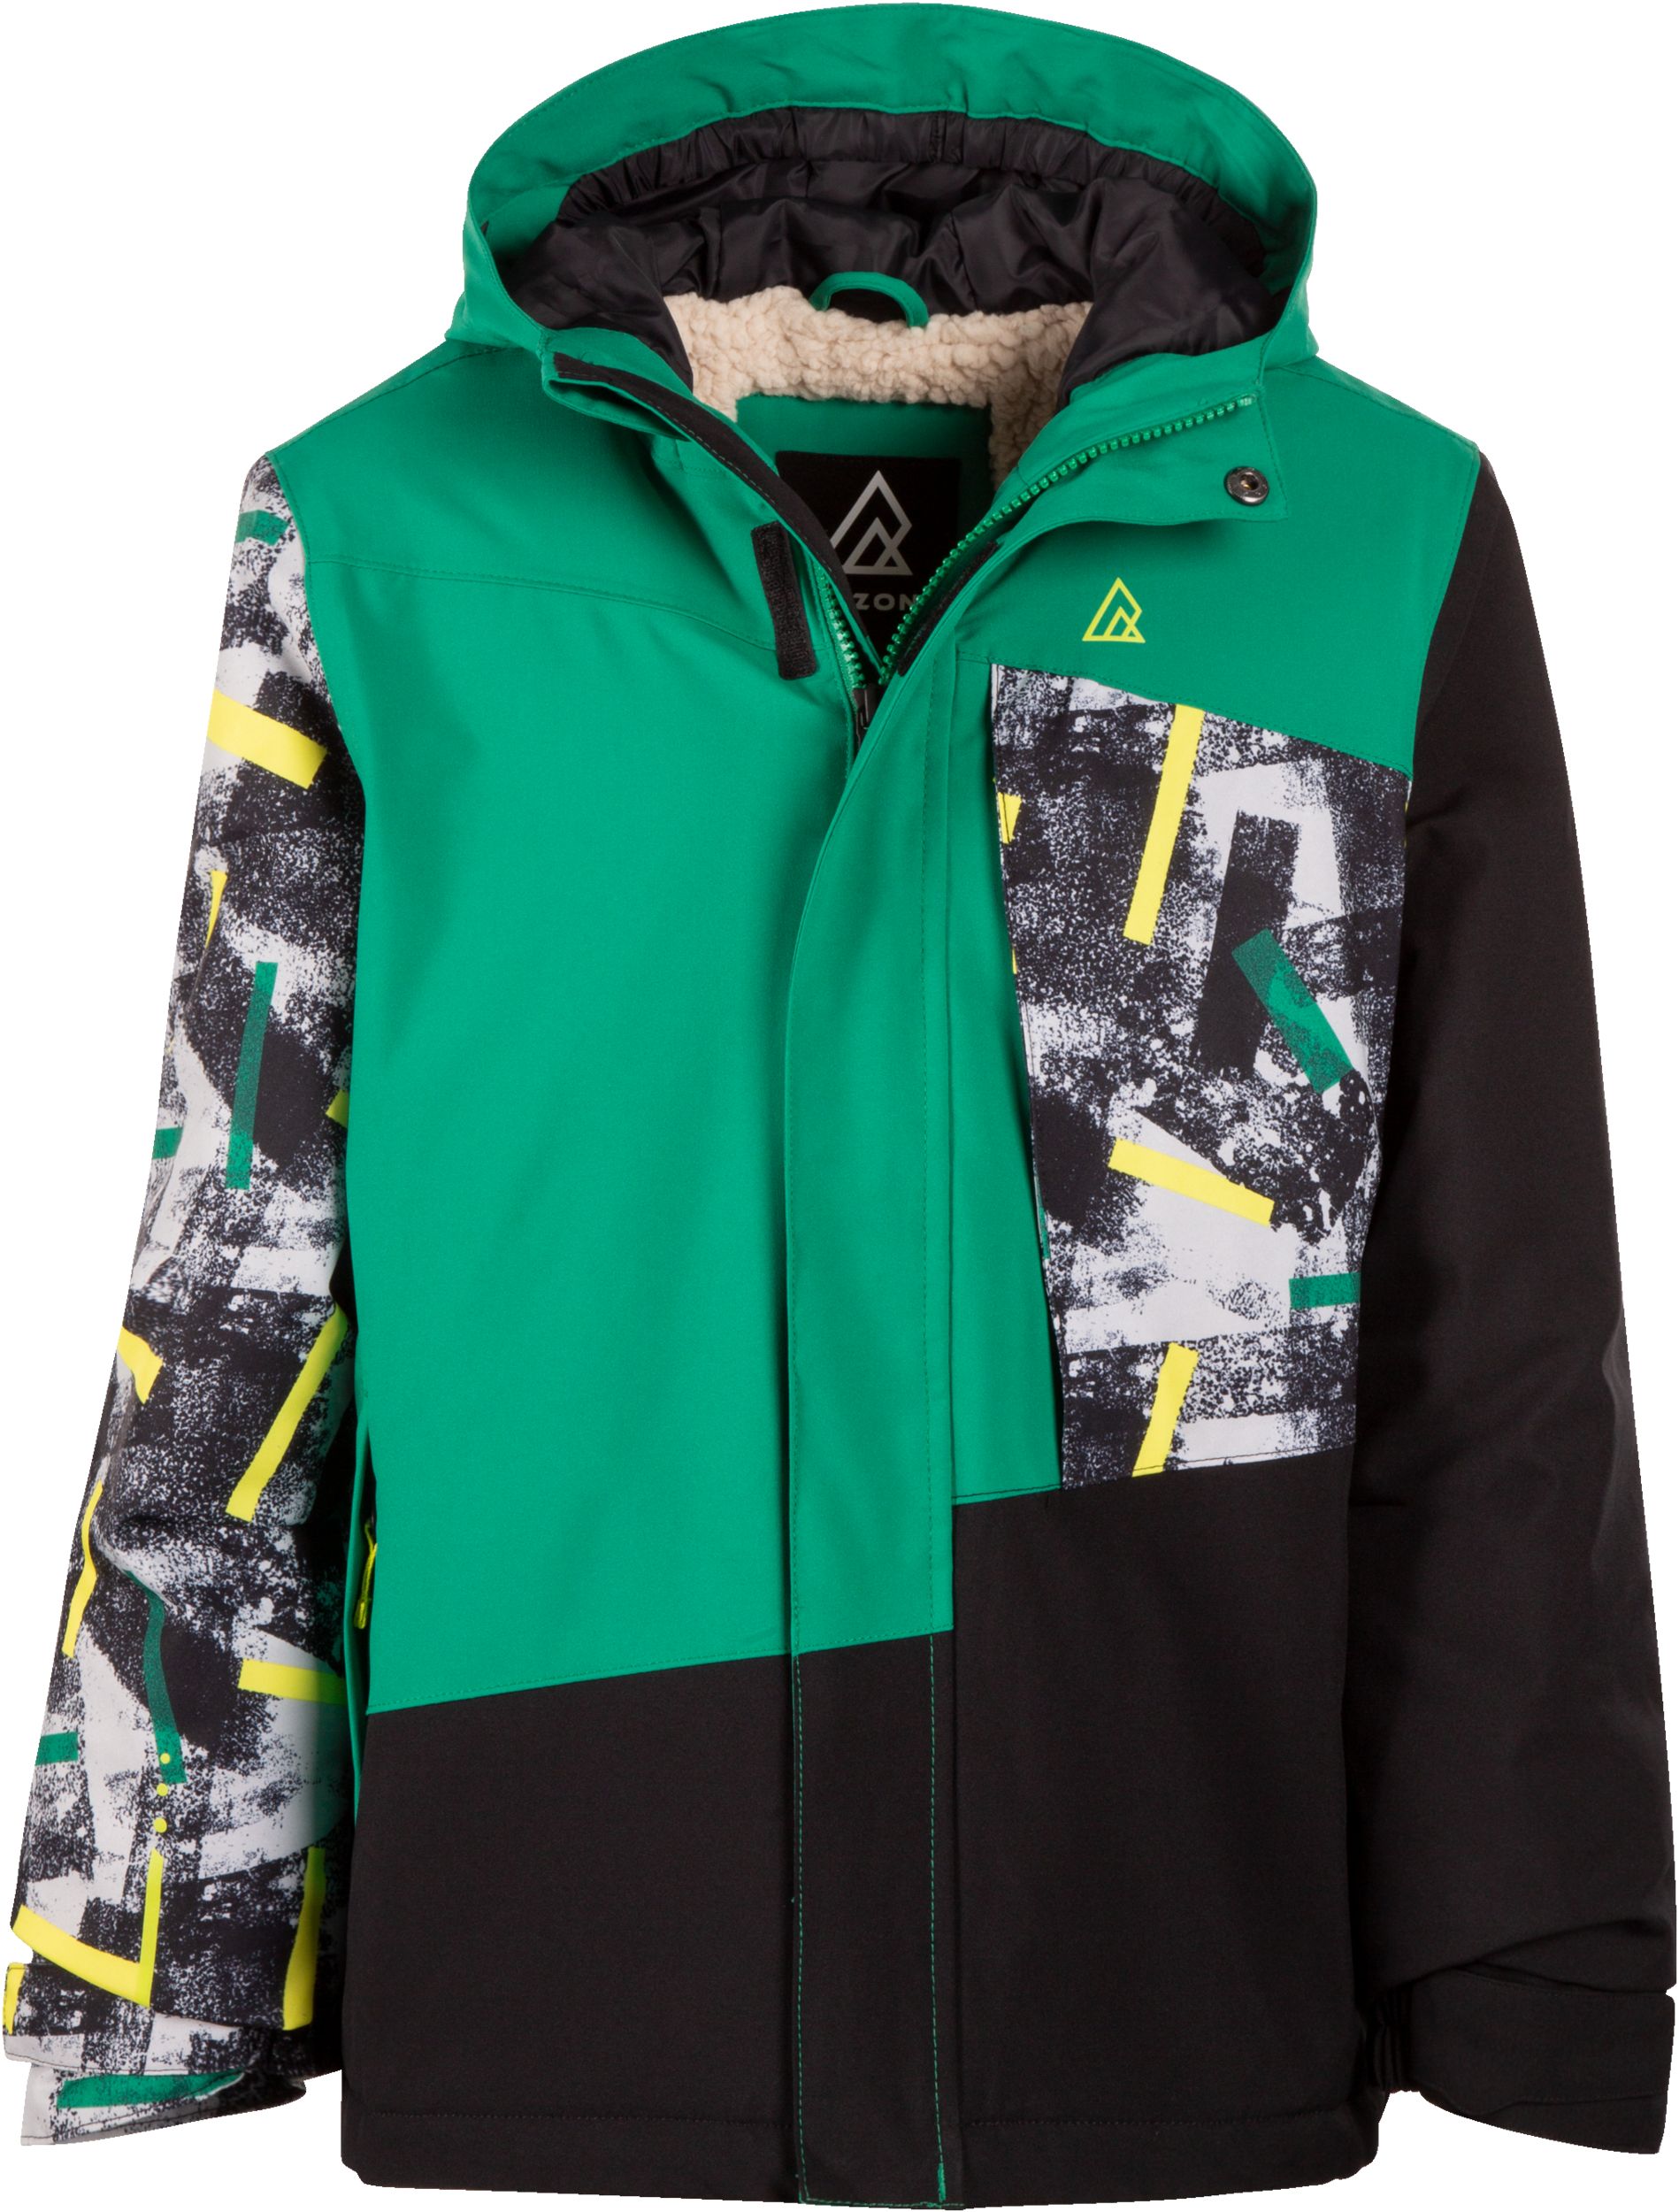 Ripzone Boys' Legacy Winter Jacket, Kids', Ski, Insulated, Waterproof ...